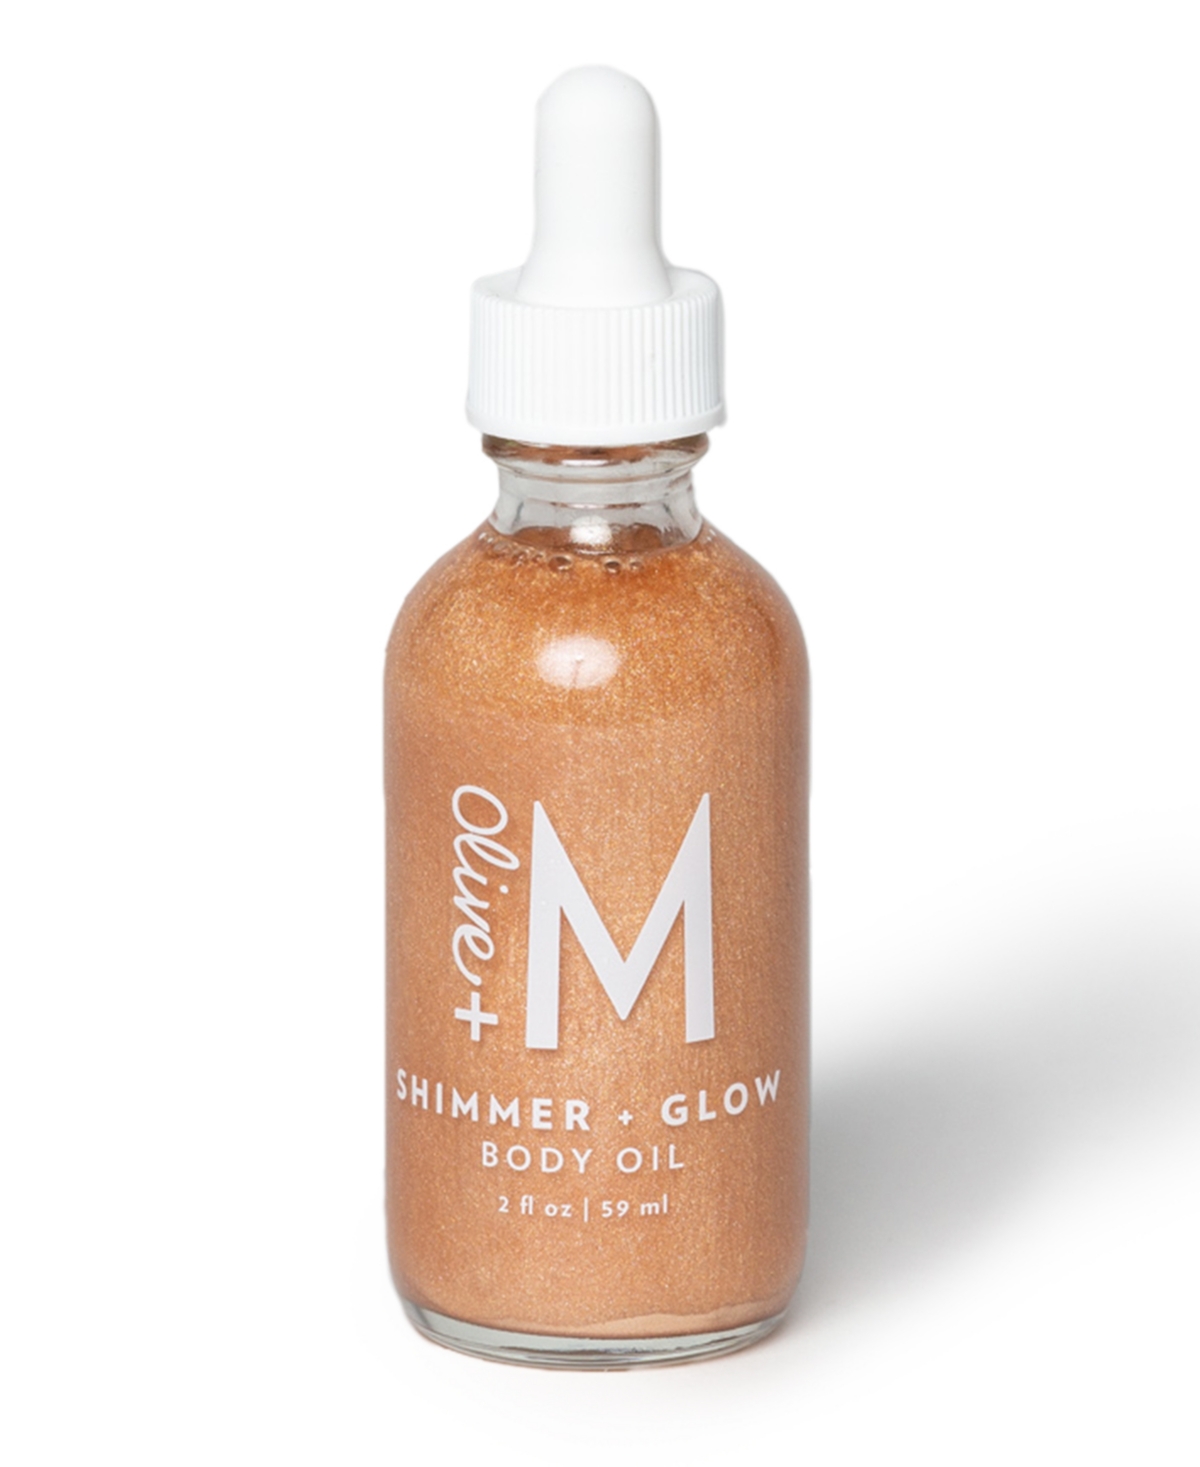 Shimmer + Glow Body Oil, 2 Oz. - Champaign